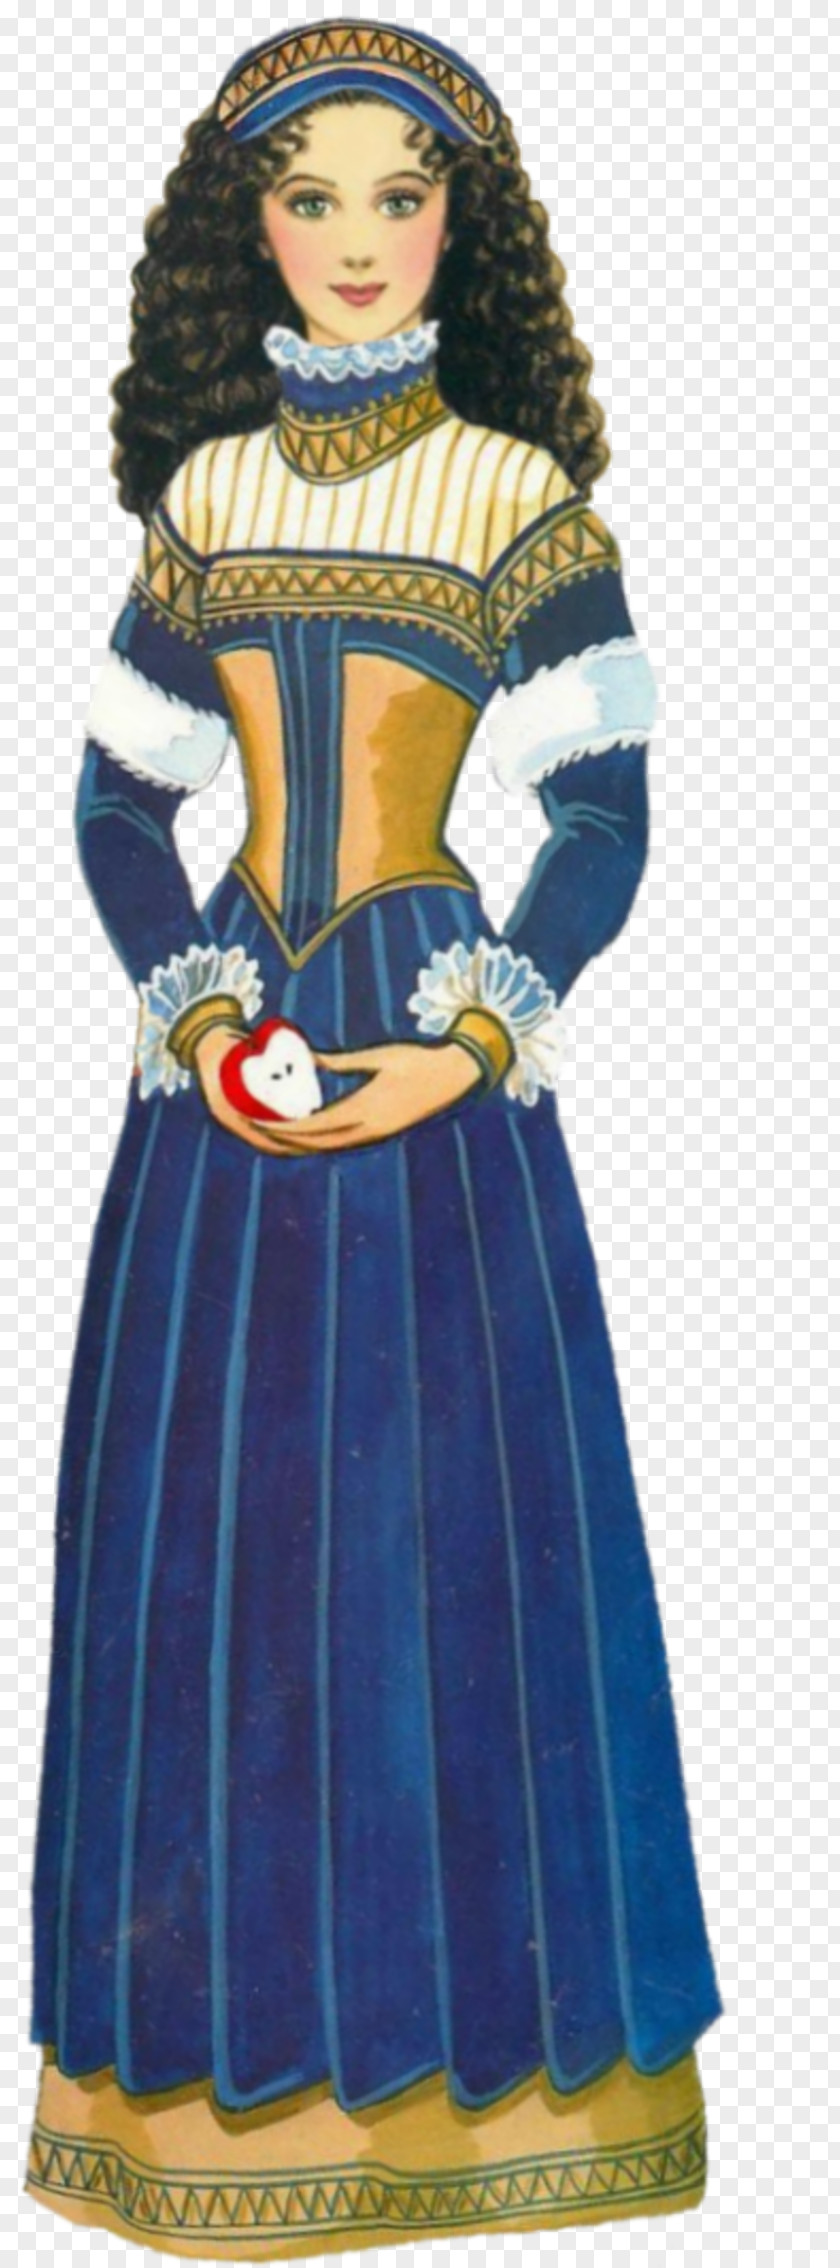 Snow White Costume Design PNG